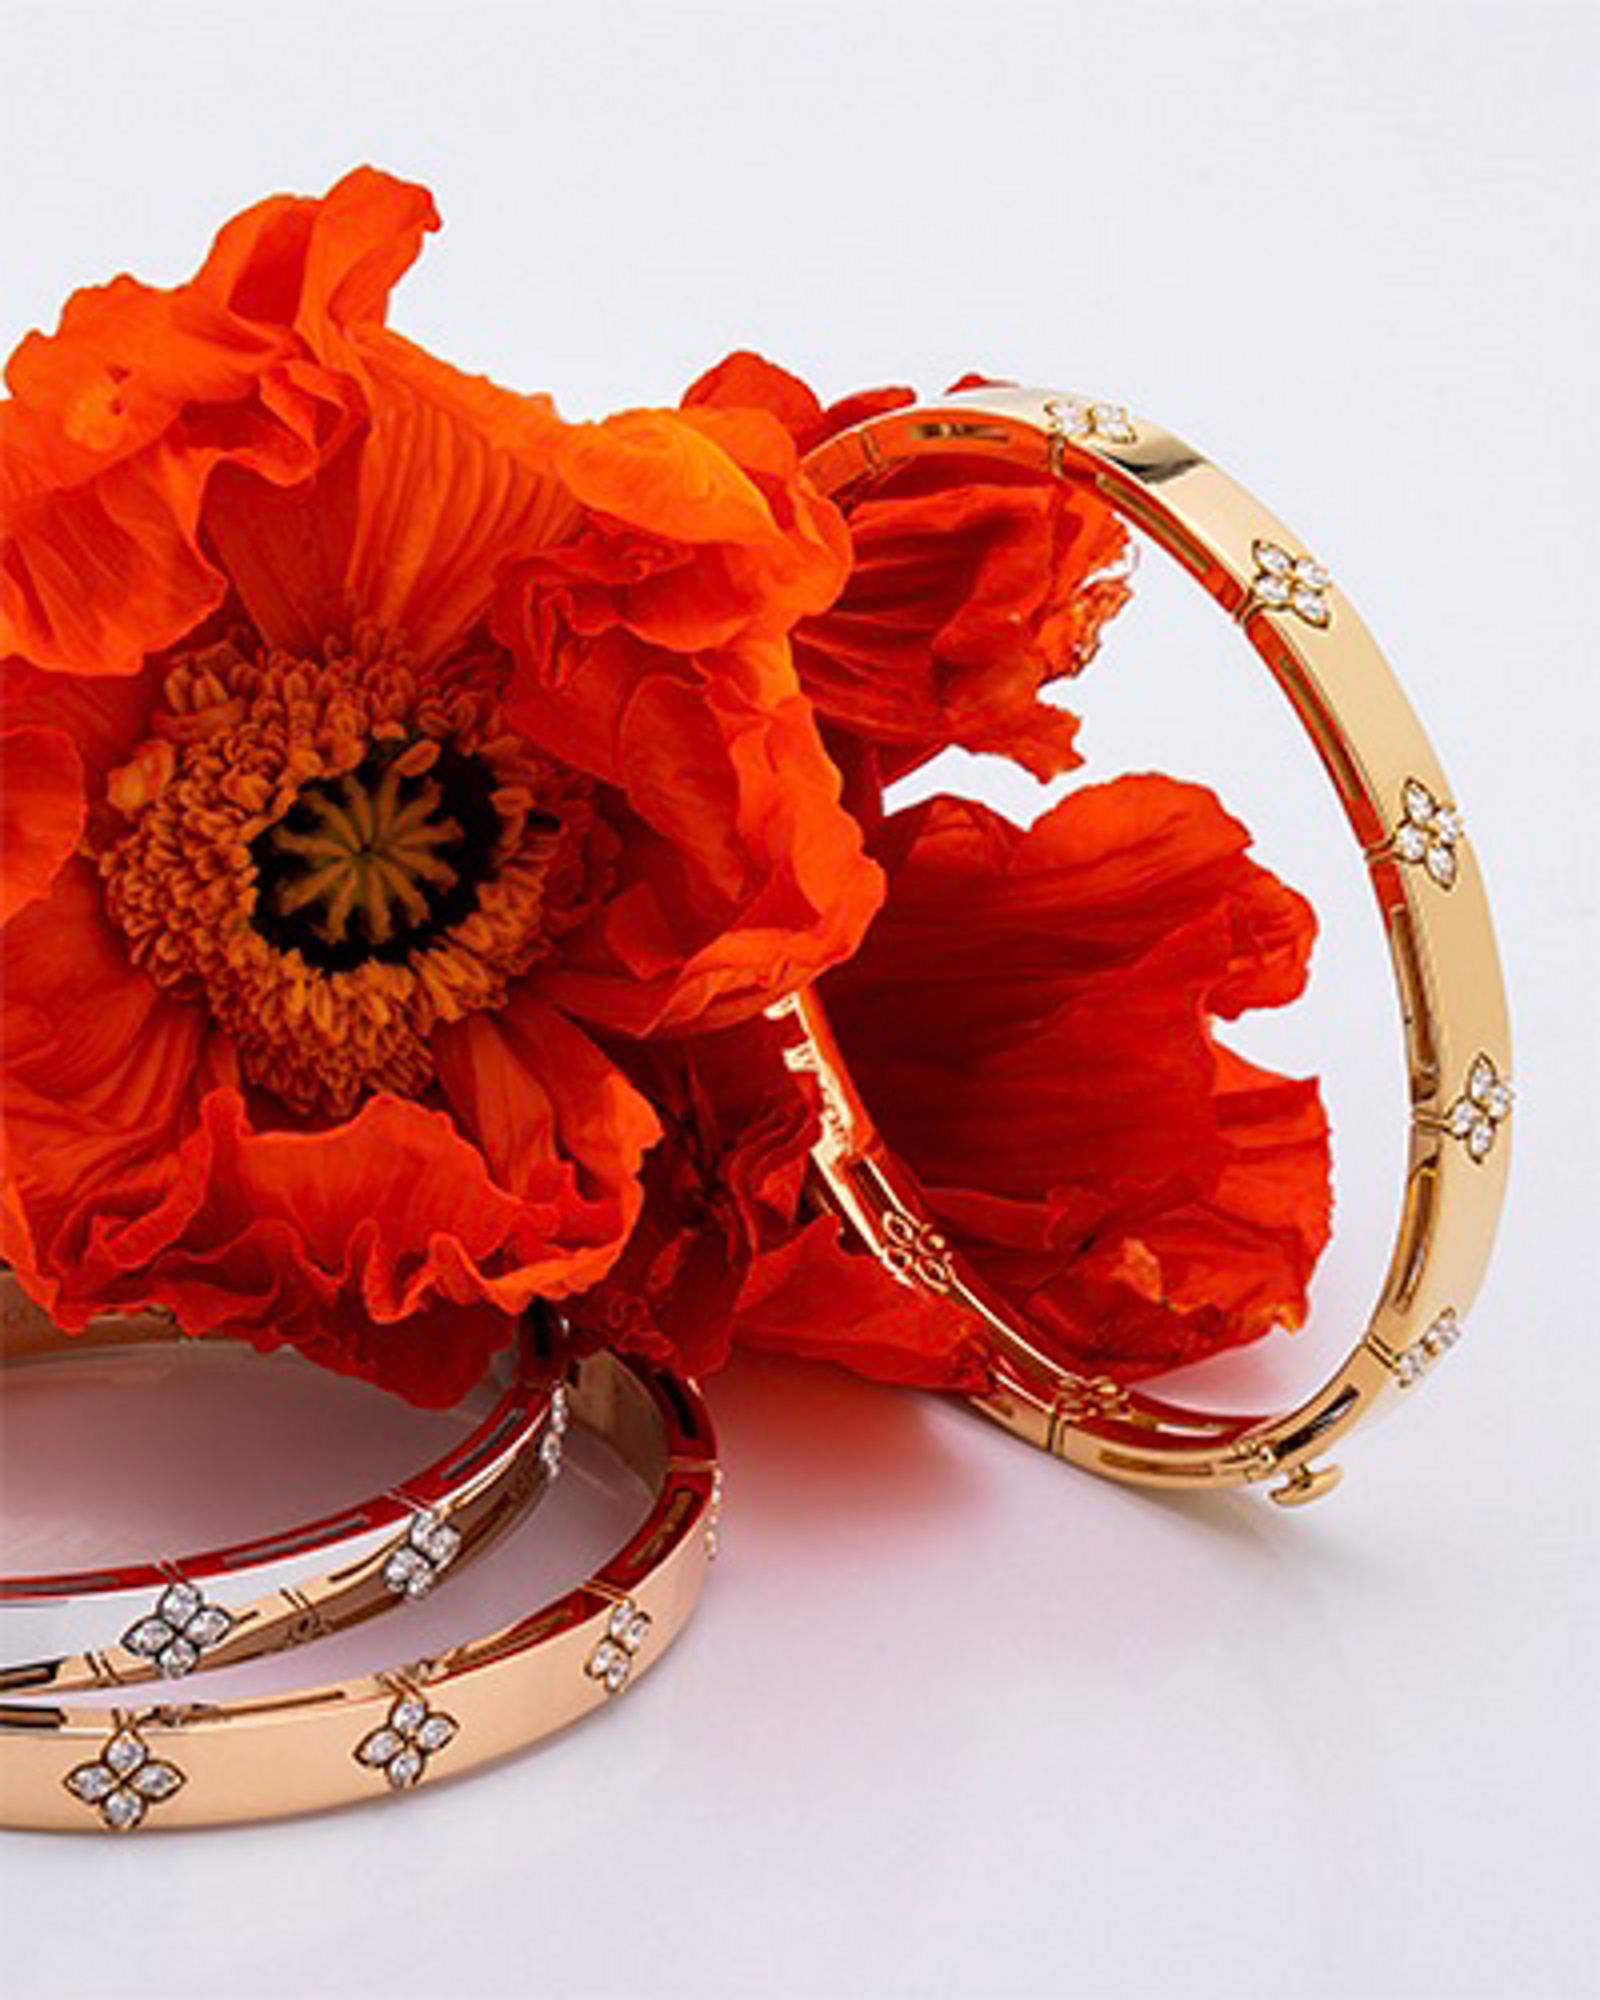 Louis Vuitton White Gold And Diamond Convertible Necklace Bracelet